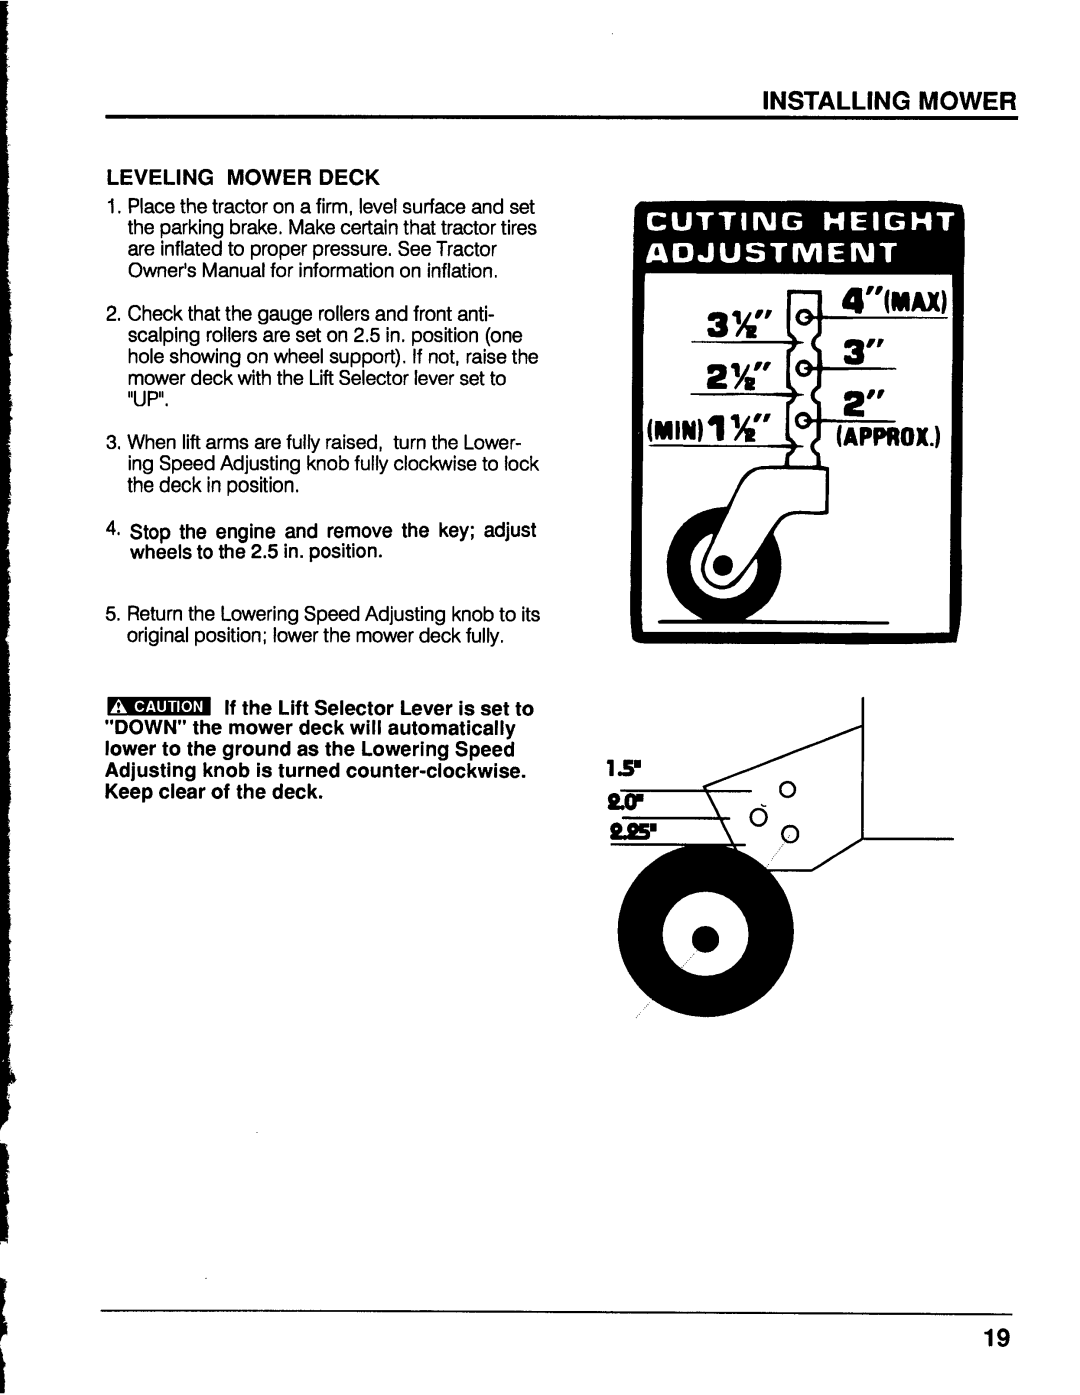 Honda Power Equipment MM52 manual Leveling Mower Deck, Installing Mower 